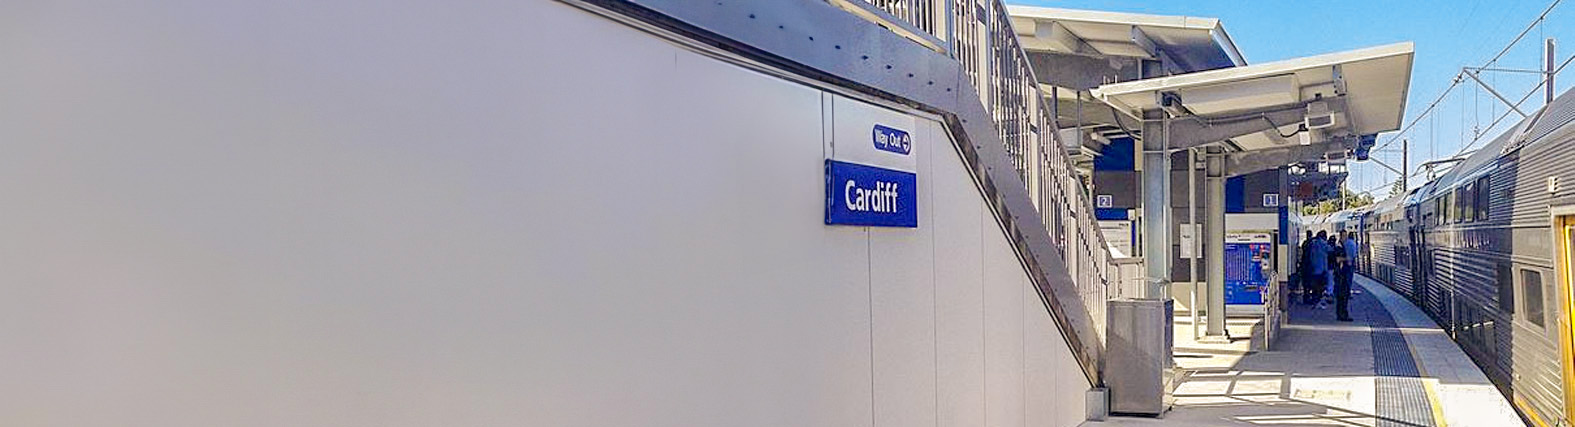 Mortgage Broker Cardiff